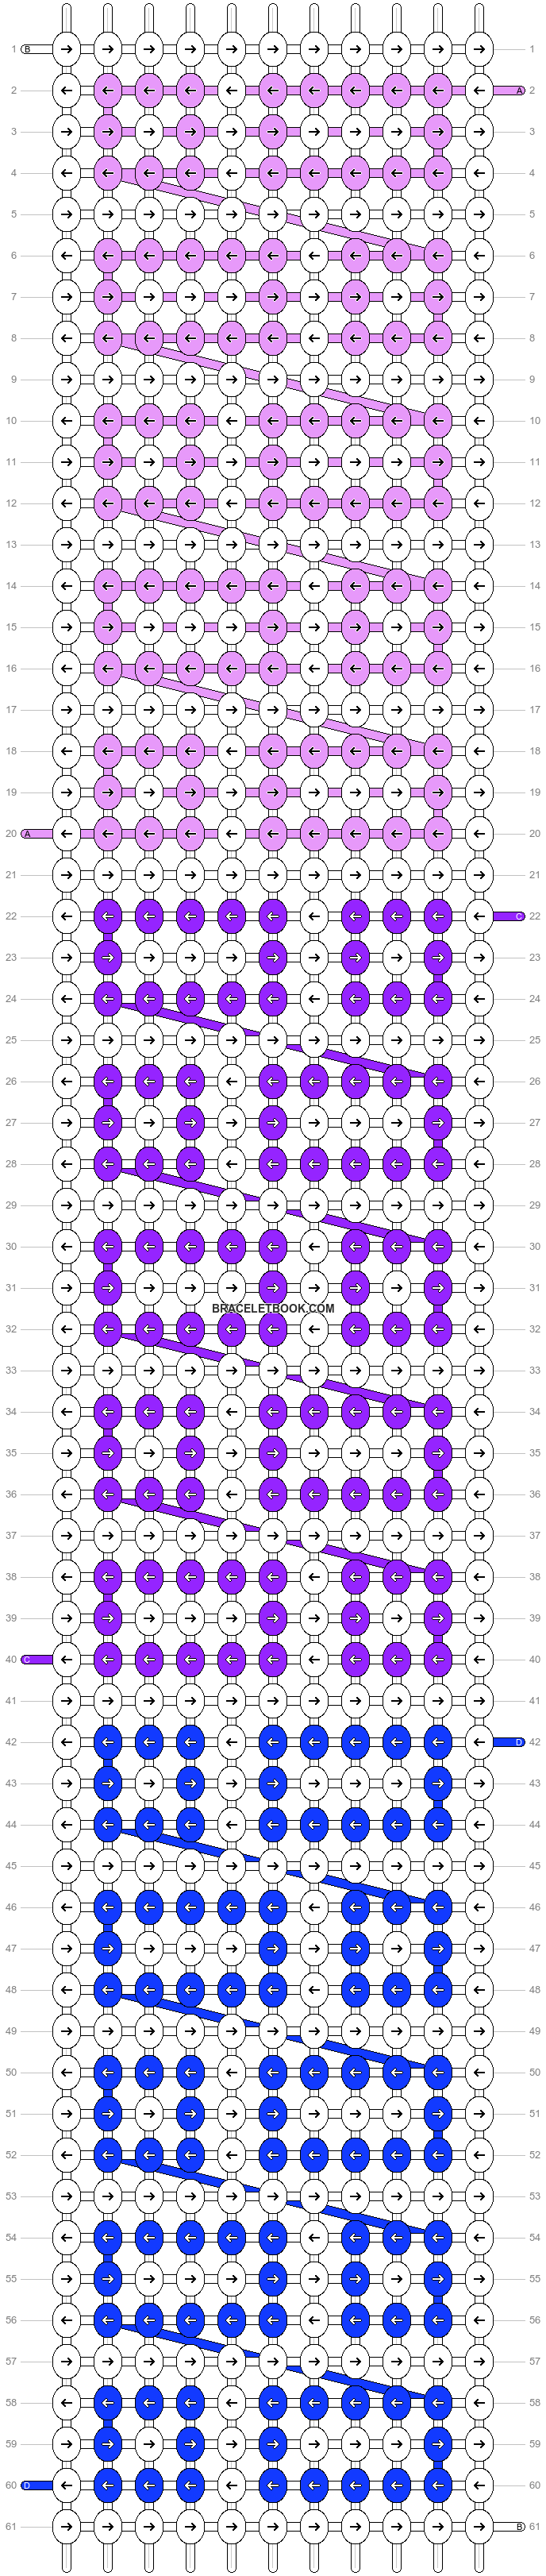 Alpha pattern #54067 variation #91261 pattern